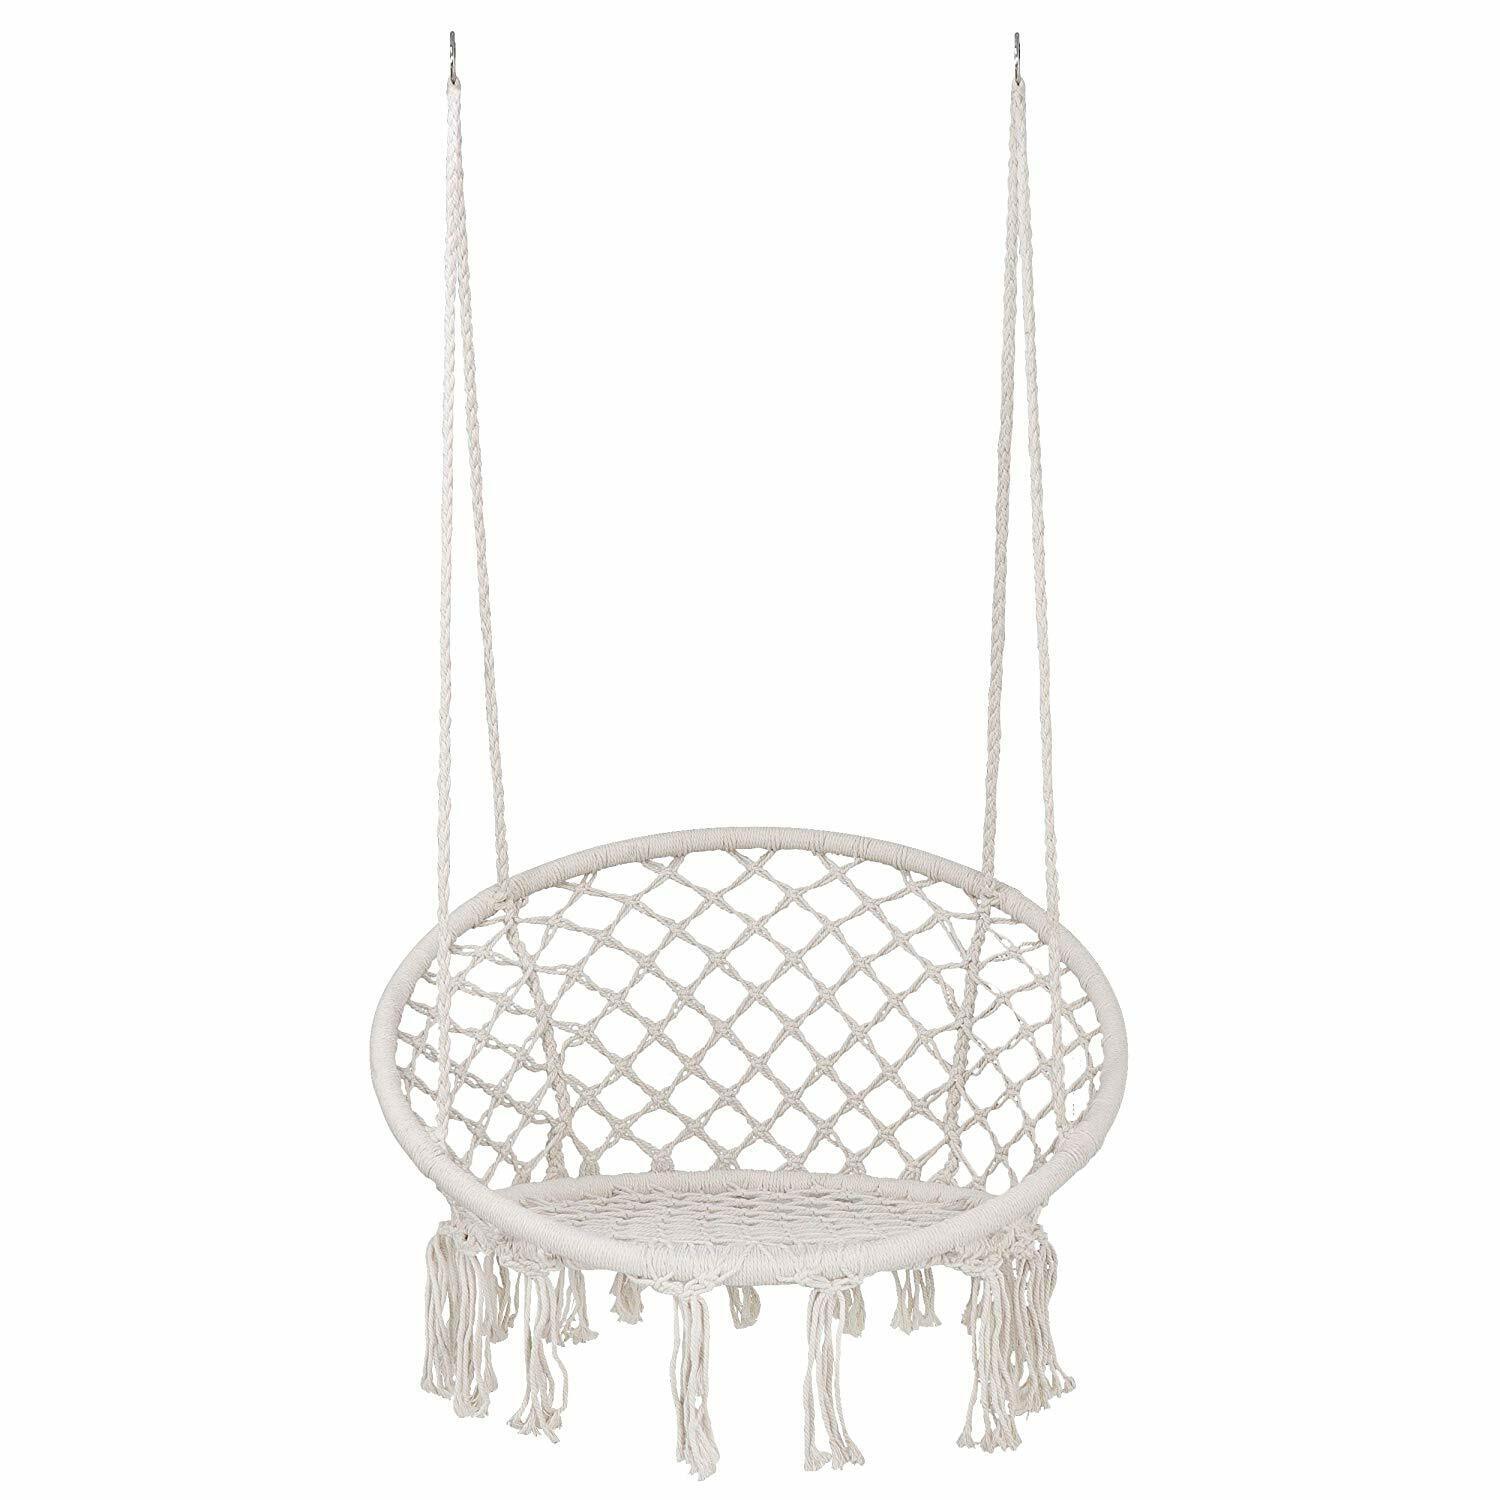 Beige Hammock Chair Macrame Swing Hanging Cotton Rope 330lb Capacity In/Outdoor